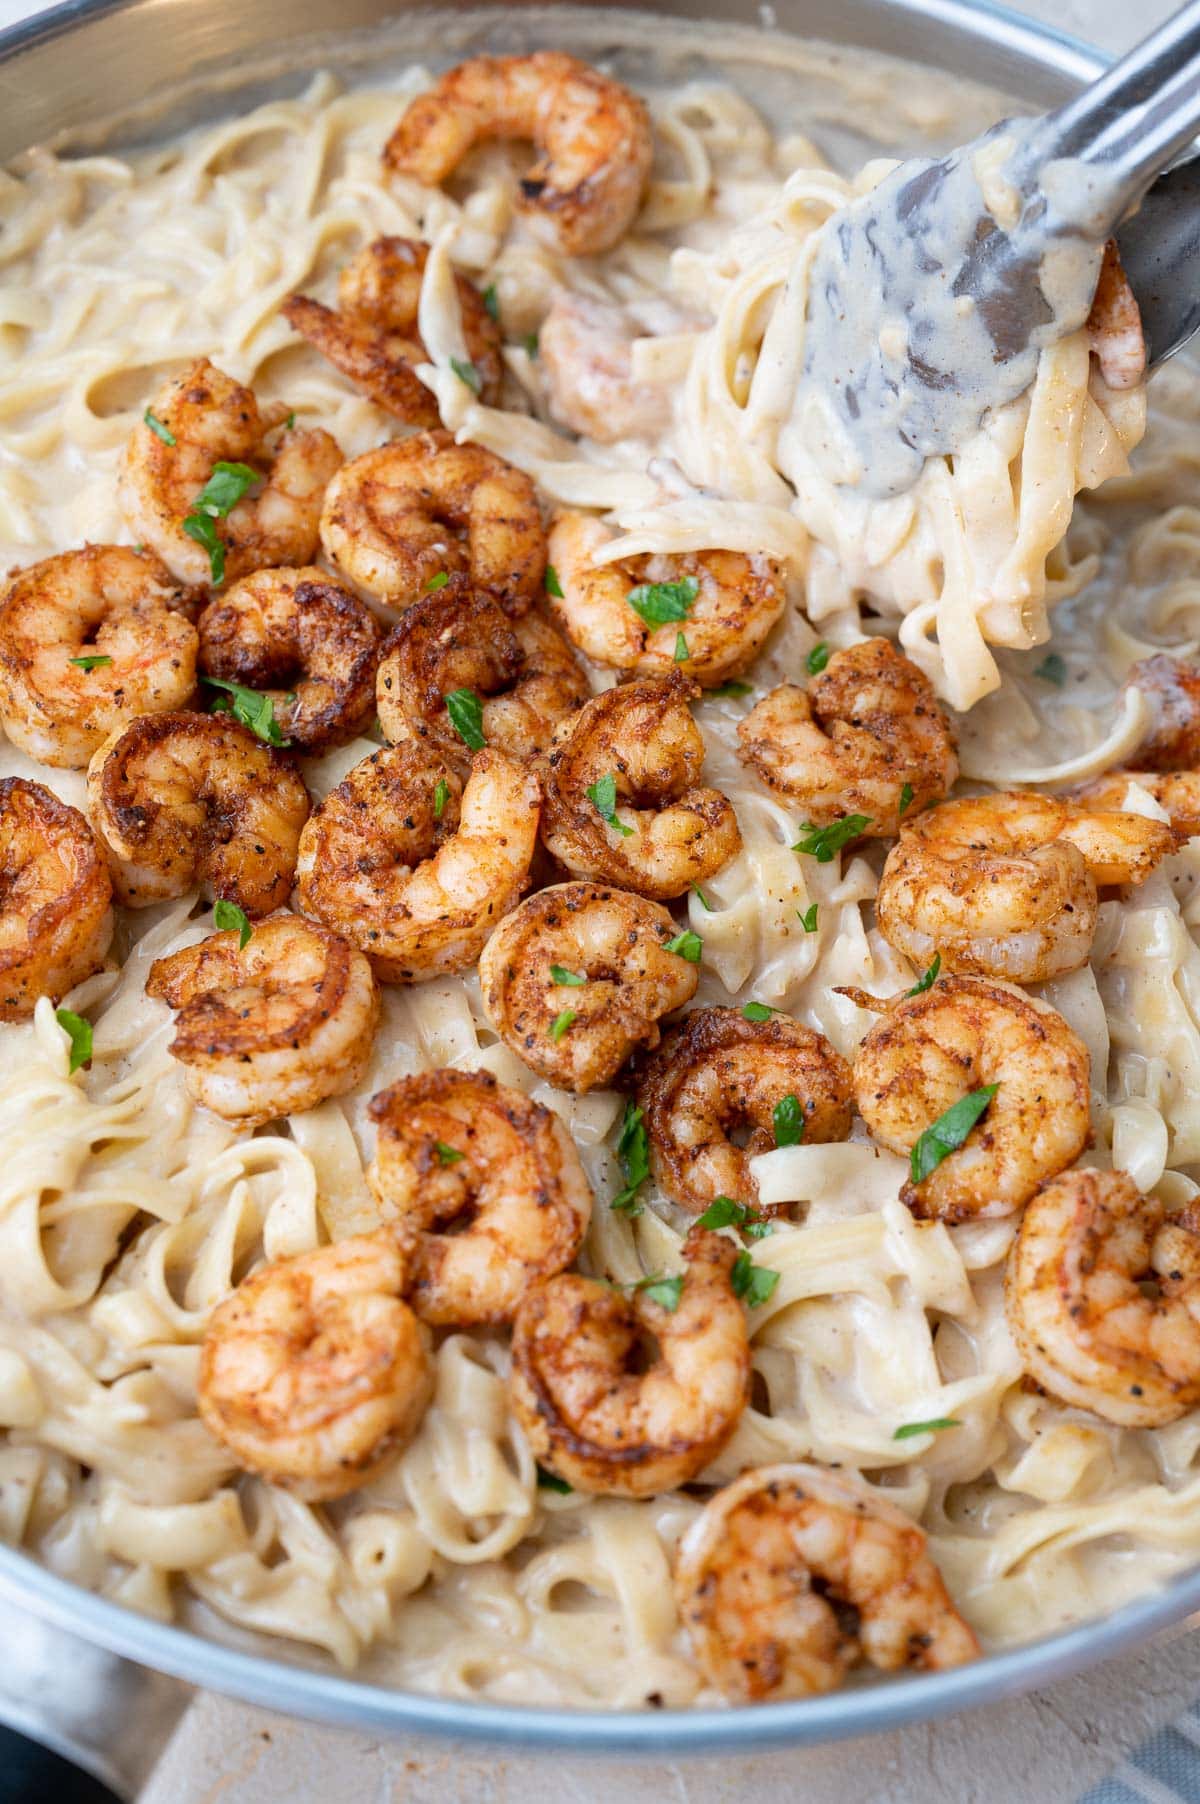 Cajun-spiced shrimp with tagliatelle pasta and alfredo sauce in a pan.